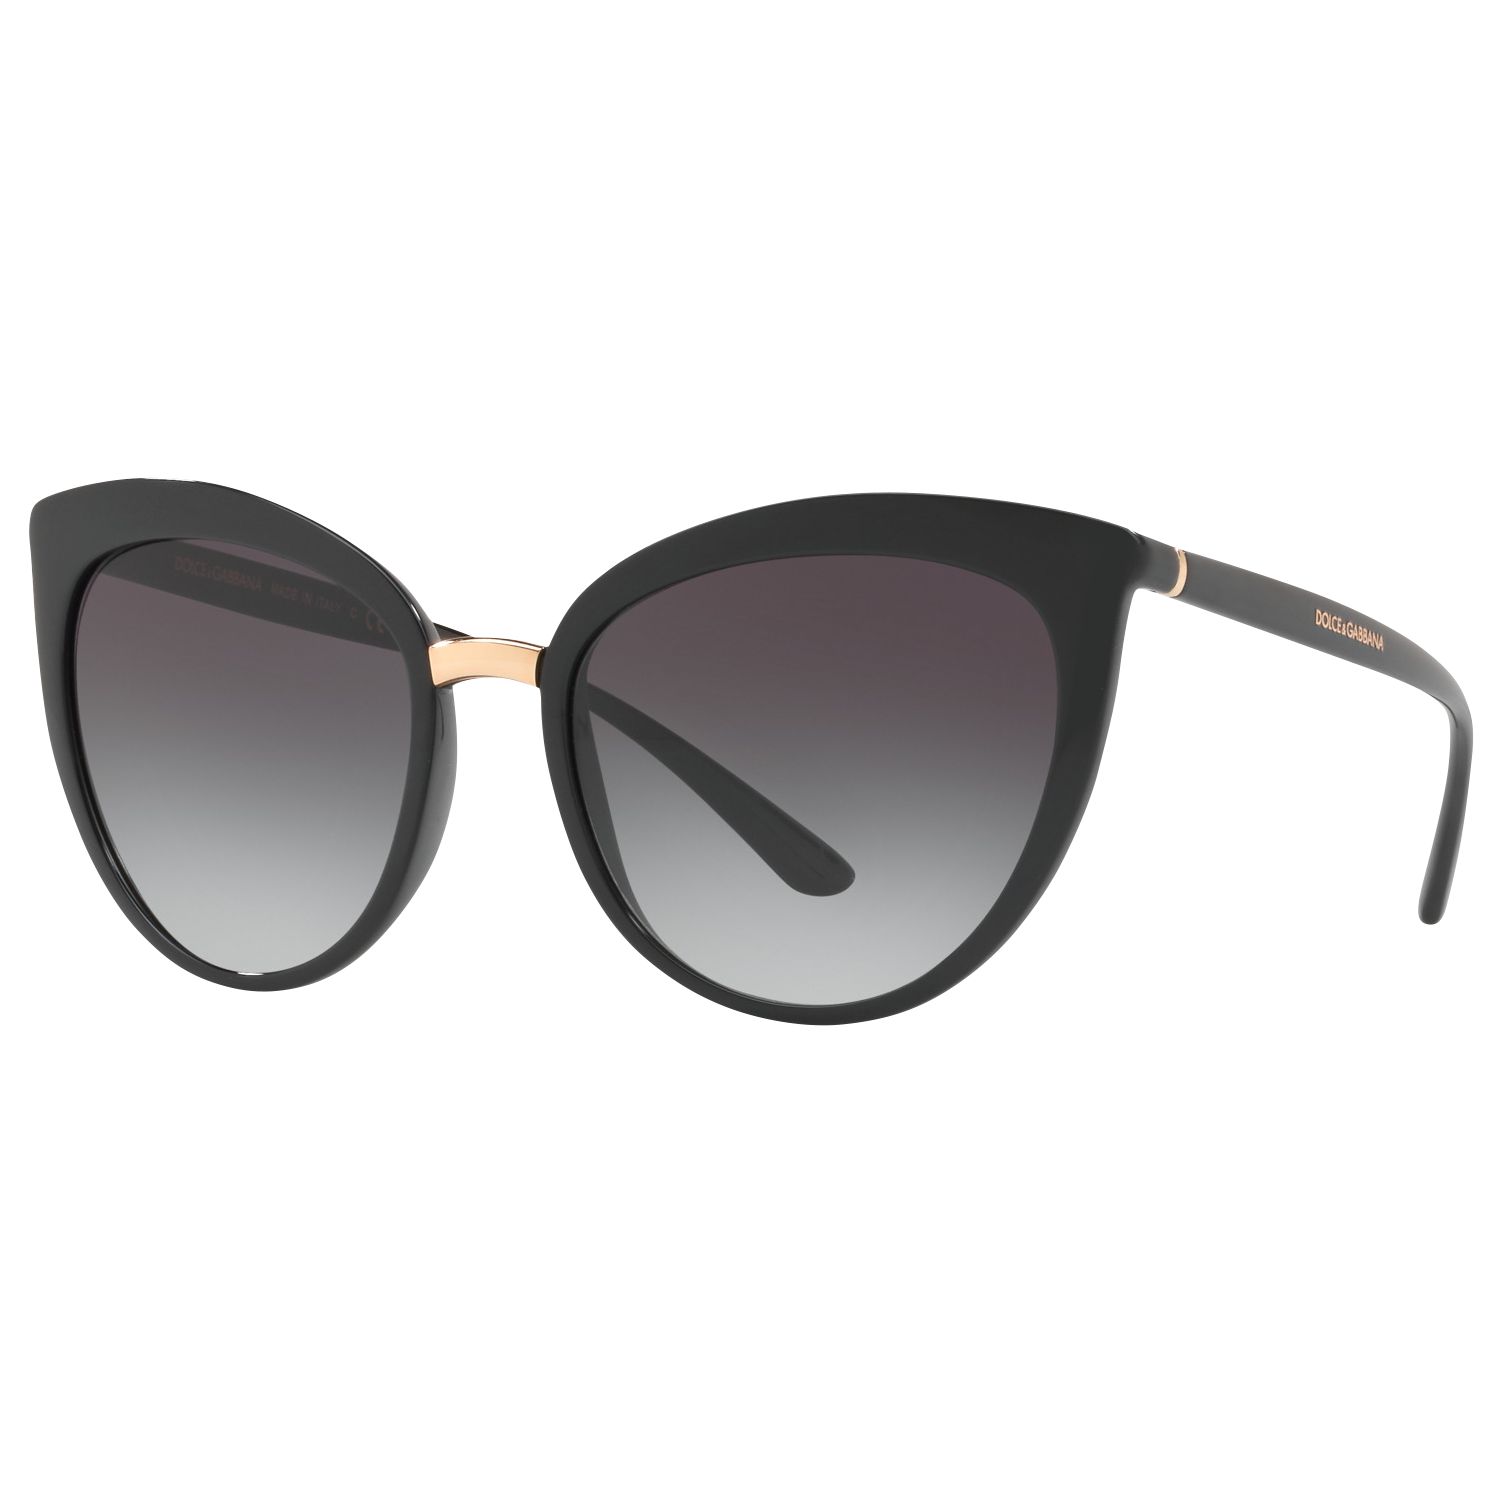 Dolce & Gabbana DG6113 Cat's Eye Sunglasses, Black/Grey Gradient at ...